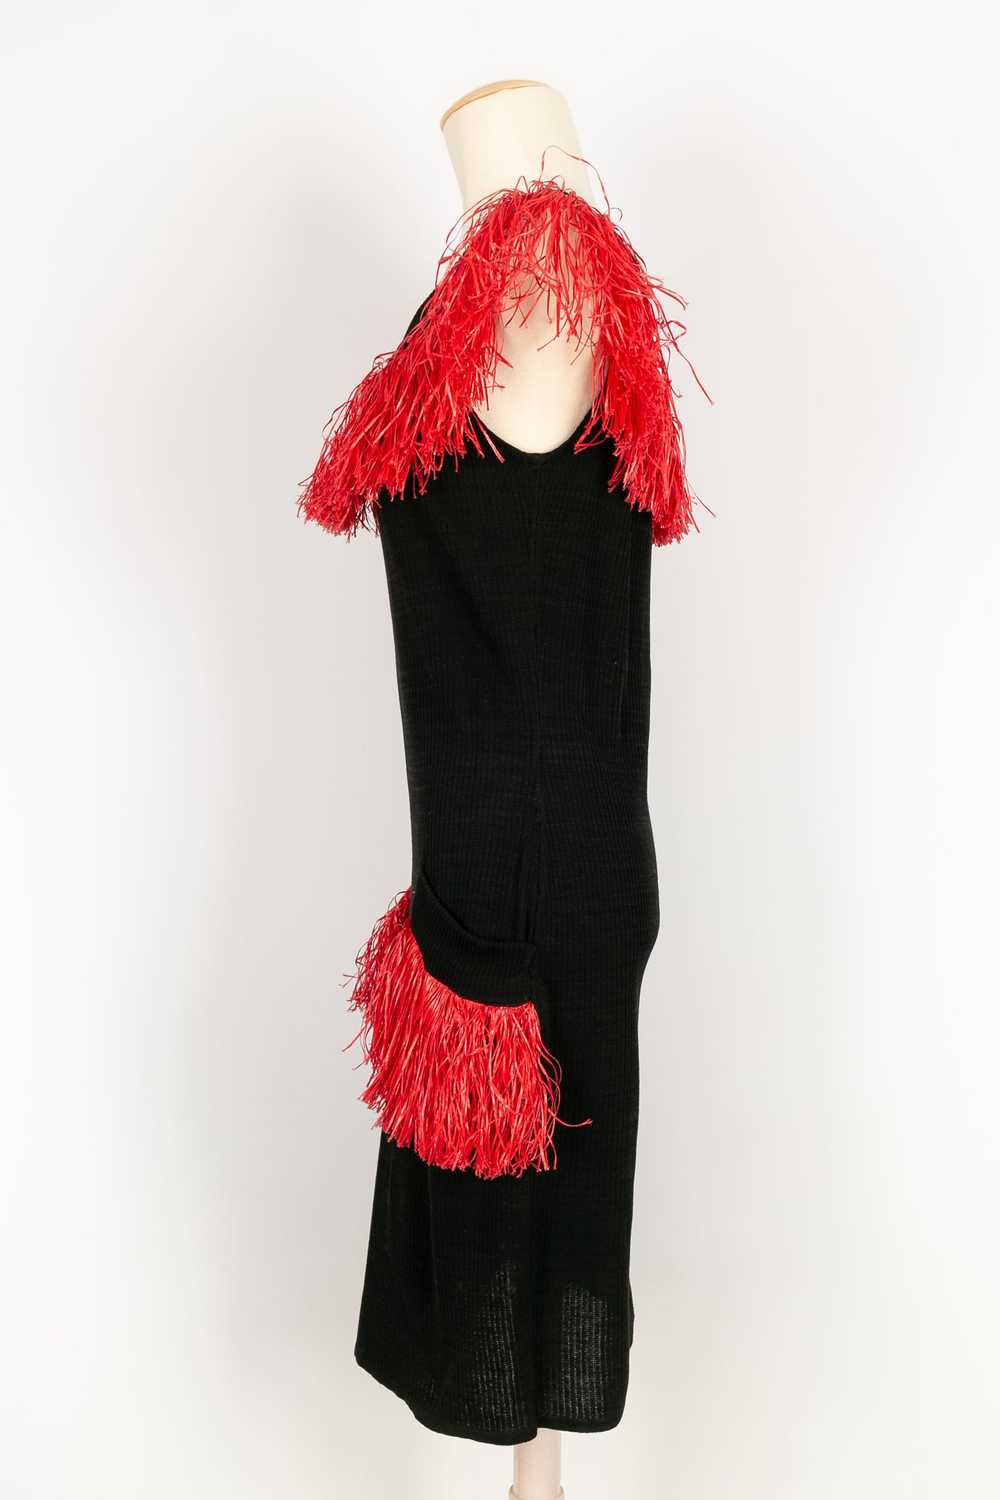 Yves Saint Laurent dress 1988 - image 2